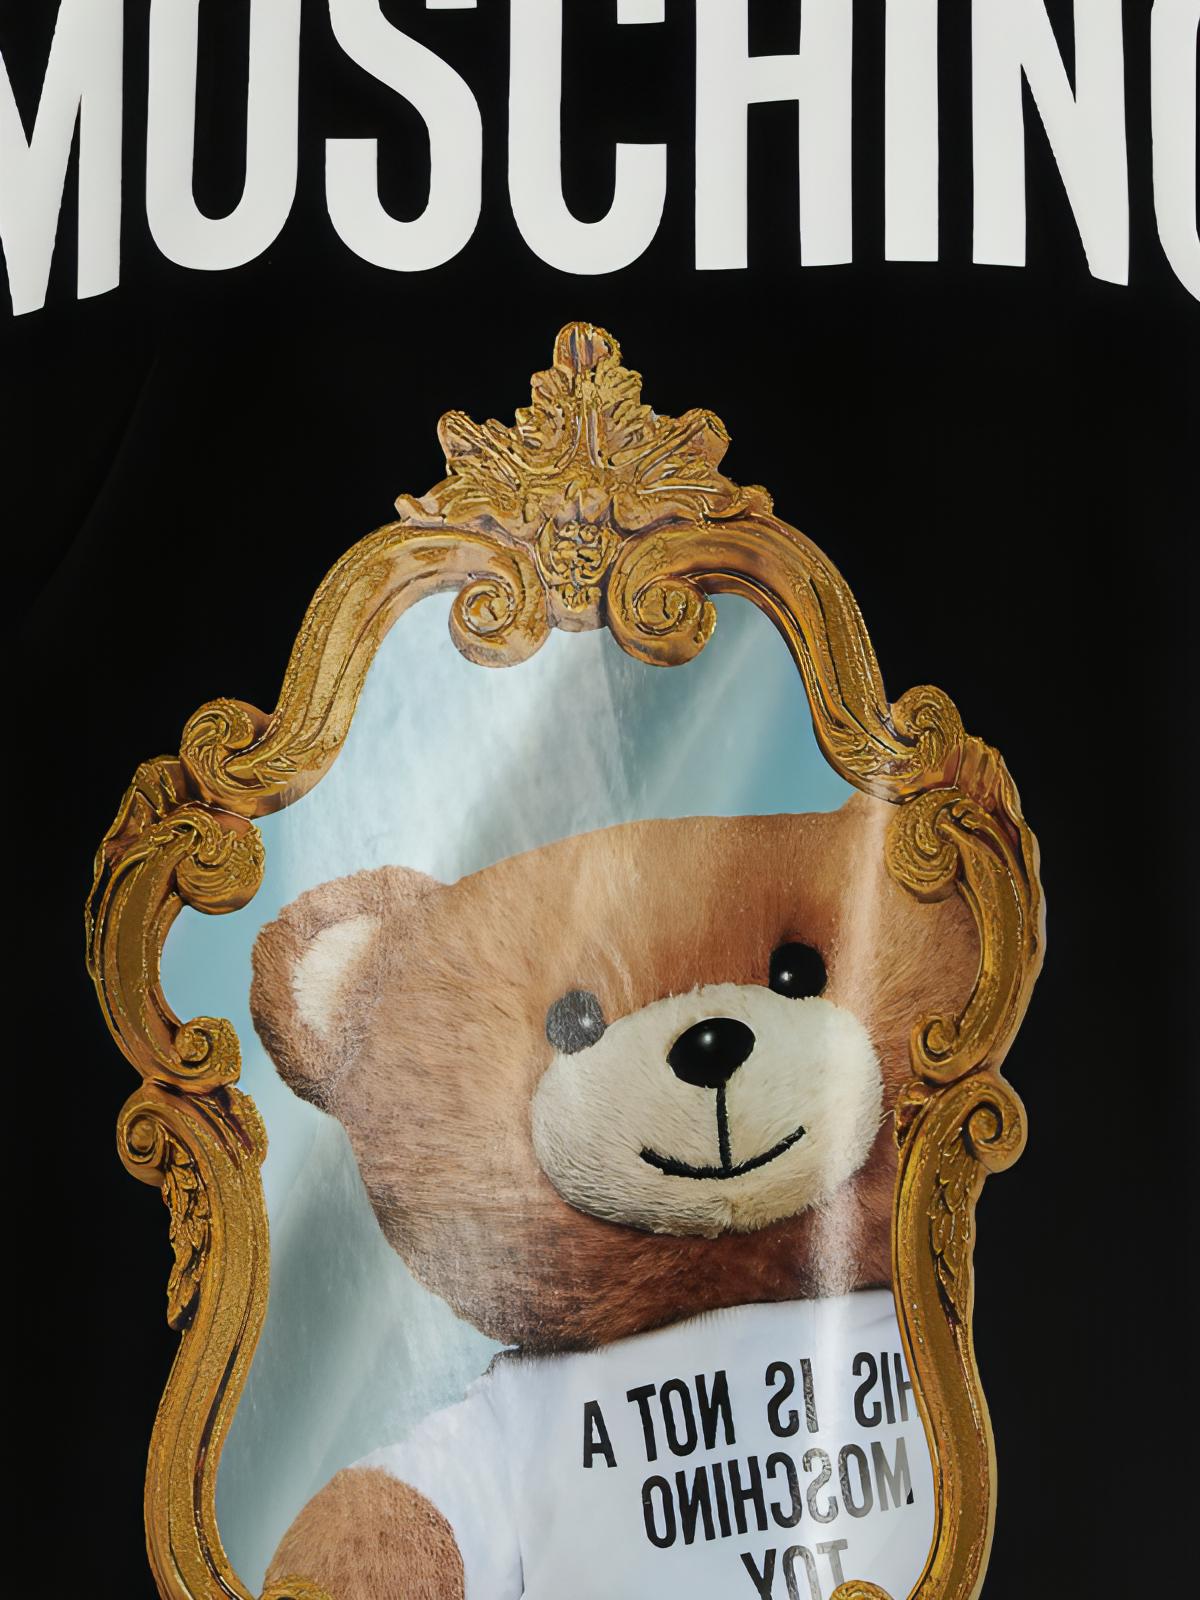 Moschino Police Teddy Bear